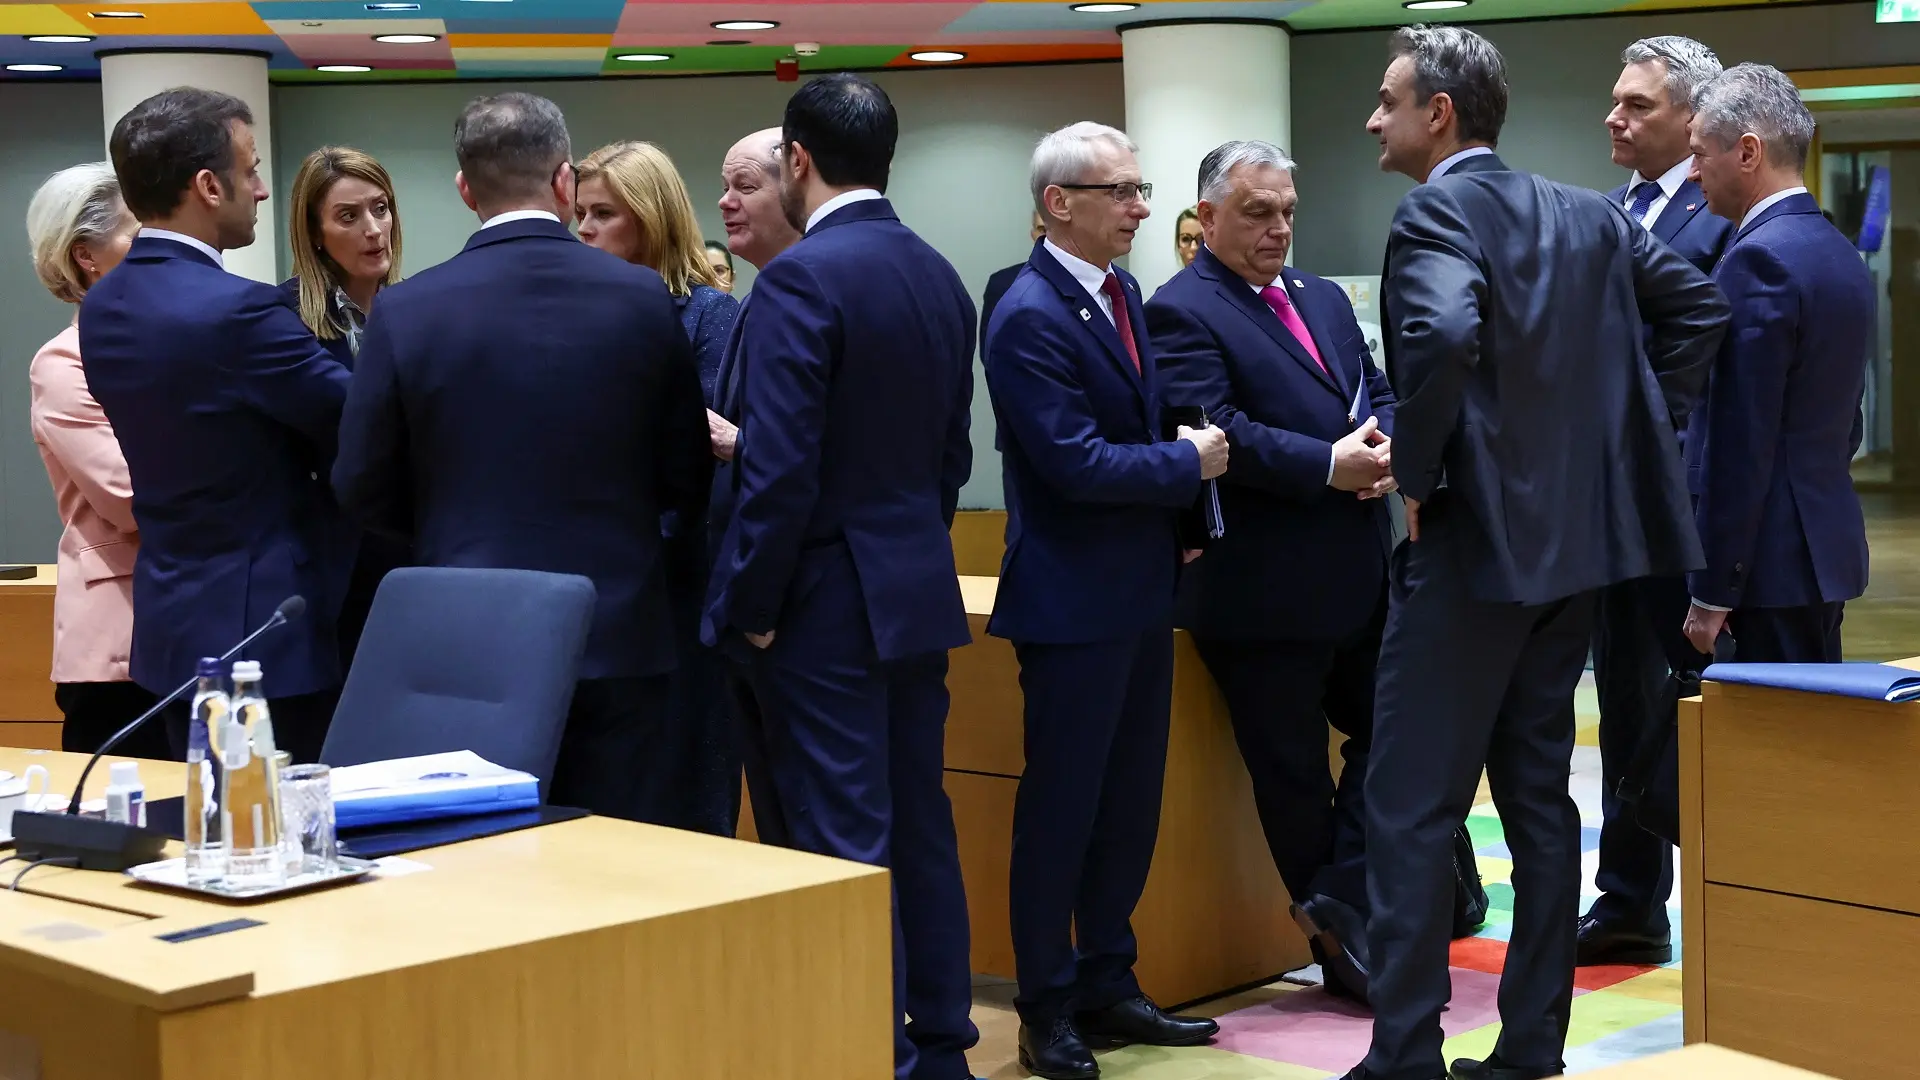 samit lidera evropske unije, 14 dec 2023 - foto Reuters-657c6474c0c44.webp